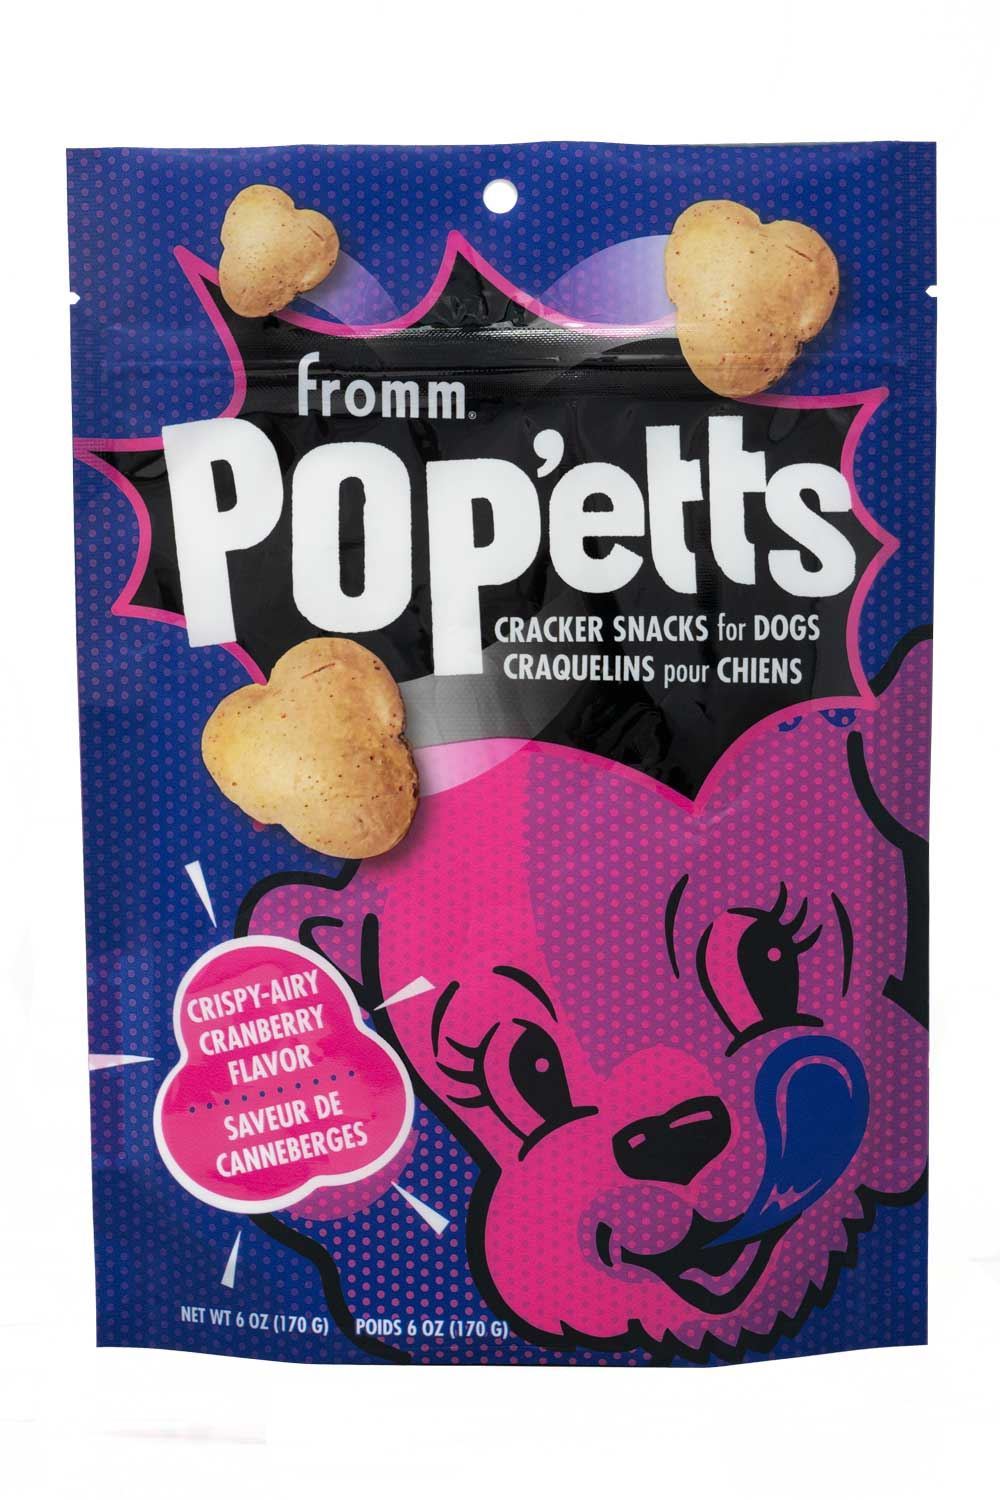 Pop'etts Crispy-Airy Cranberry Cracker Snacks for Dogs